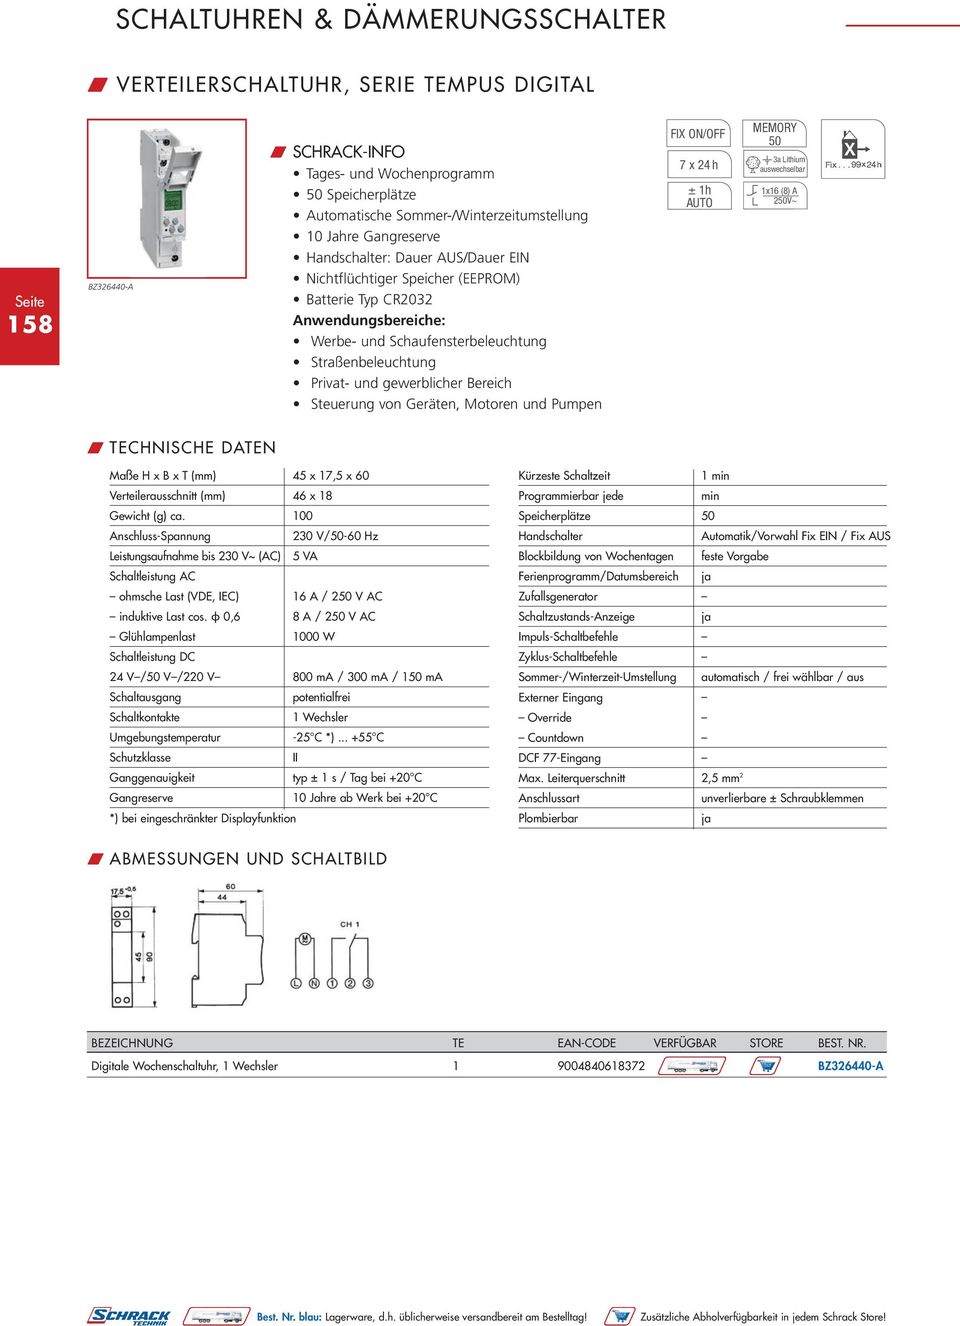 (8) A 45 x 17,5 x 60 46 x 18 100 230 V/50-60 Hz Leistungsaufnahme bis 230 V~ (AC) 5 VA ohmsche Last (VDE, IEC) 16 A / 250 V AC induktive Last cos.